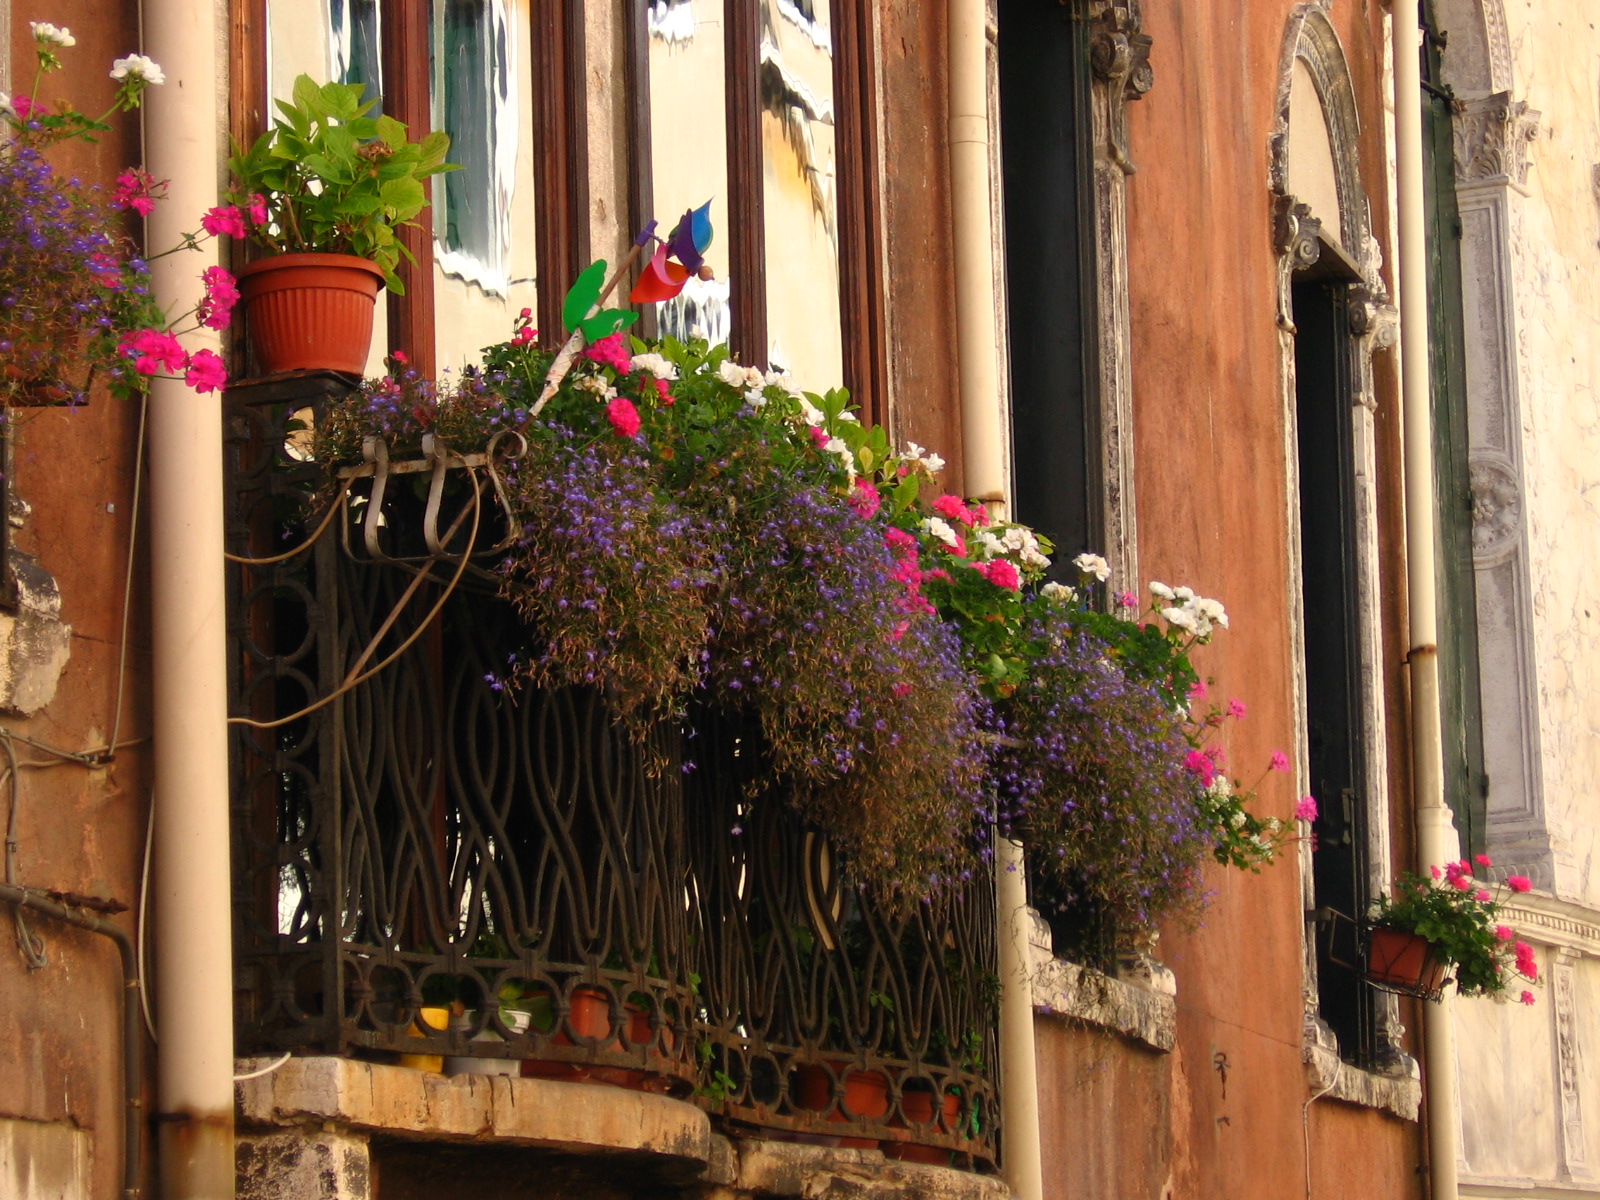 Flowers on balcony above Venice canal - Italy 